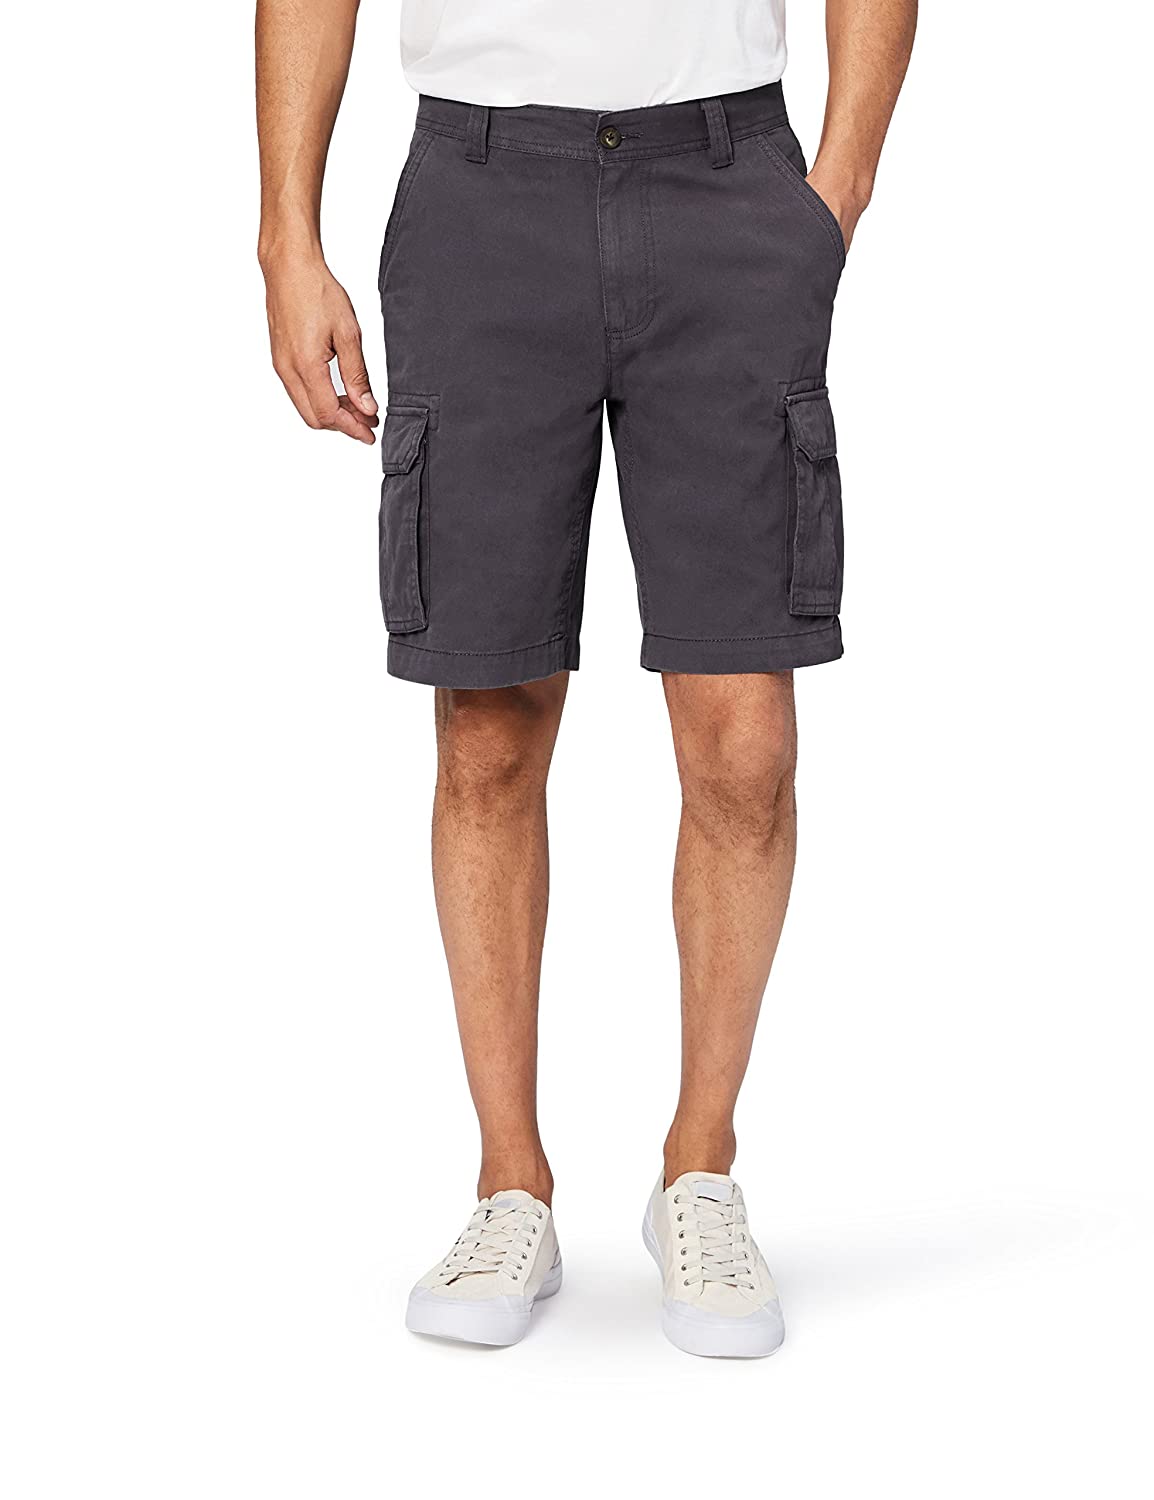 Essentials Men's Classic-Fit Cargo Short, Grey, 36, Grey, Size 36 igiV ...